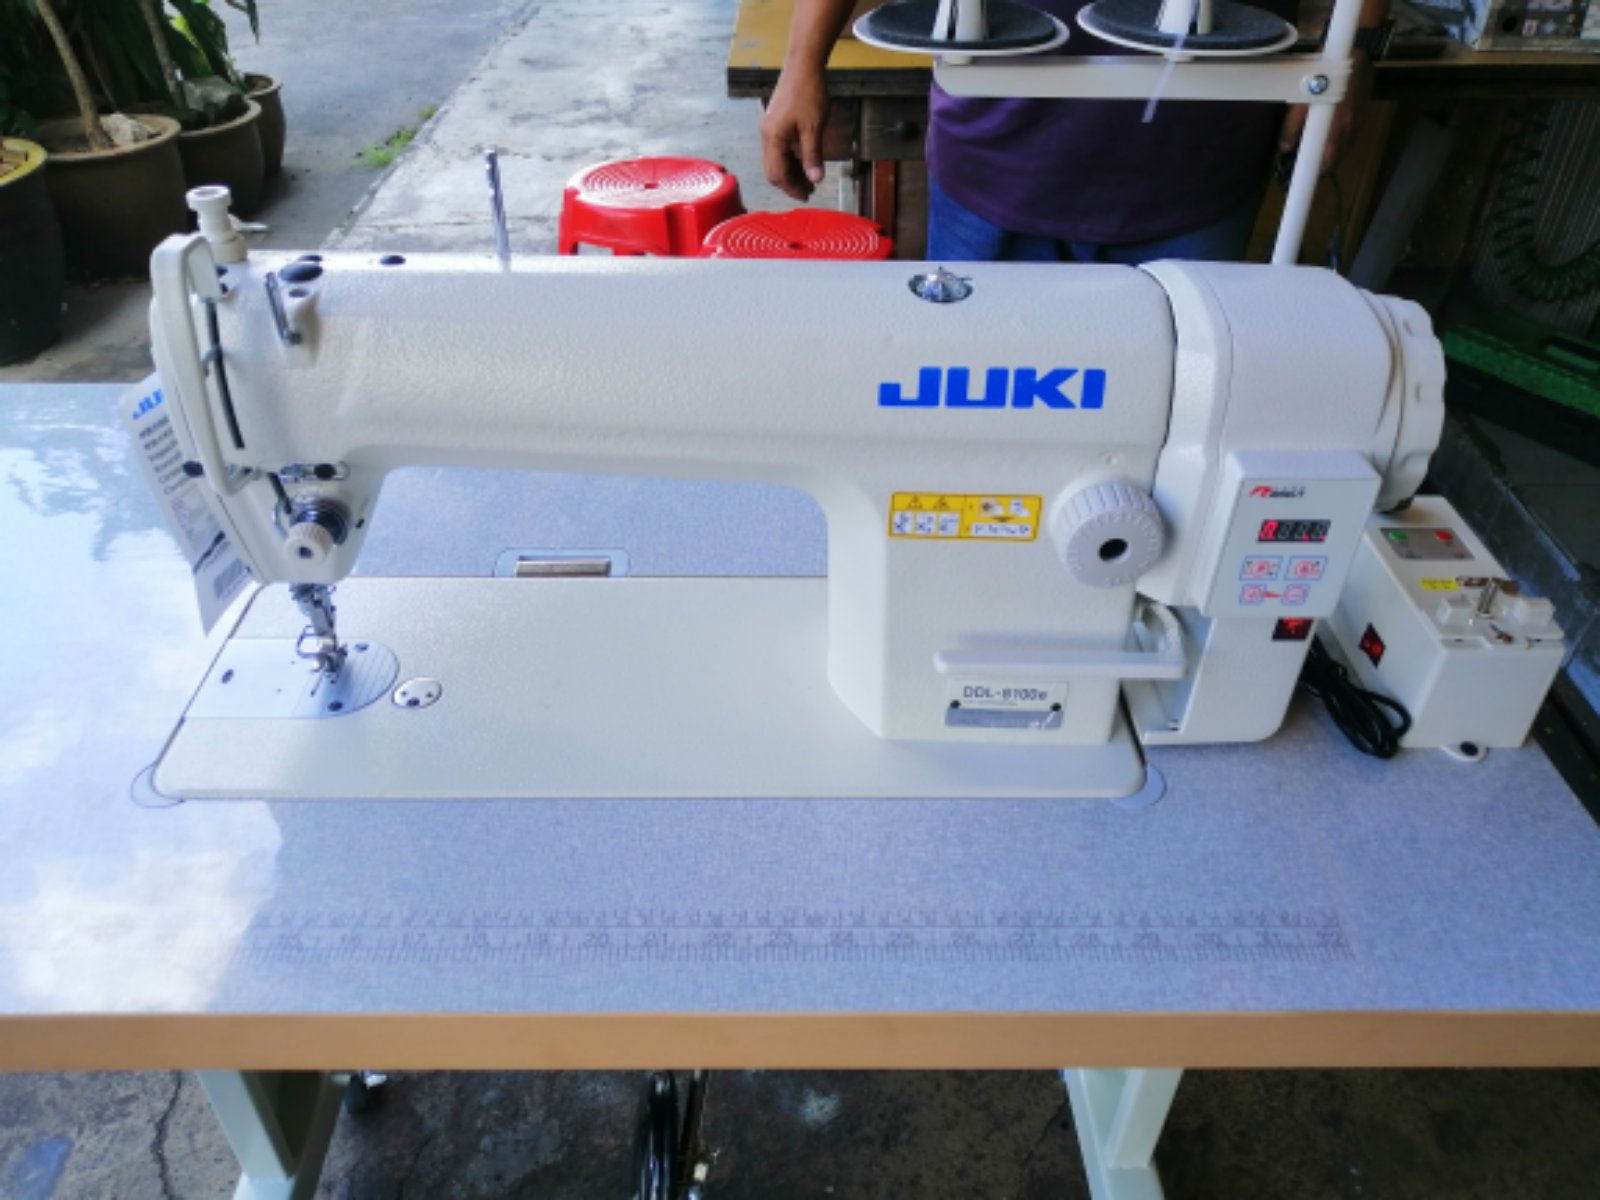 New Juki Hi Speed Direct Drive Motor Sewing Machine 